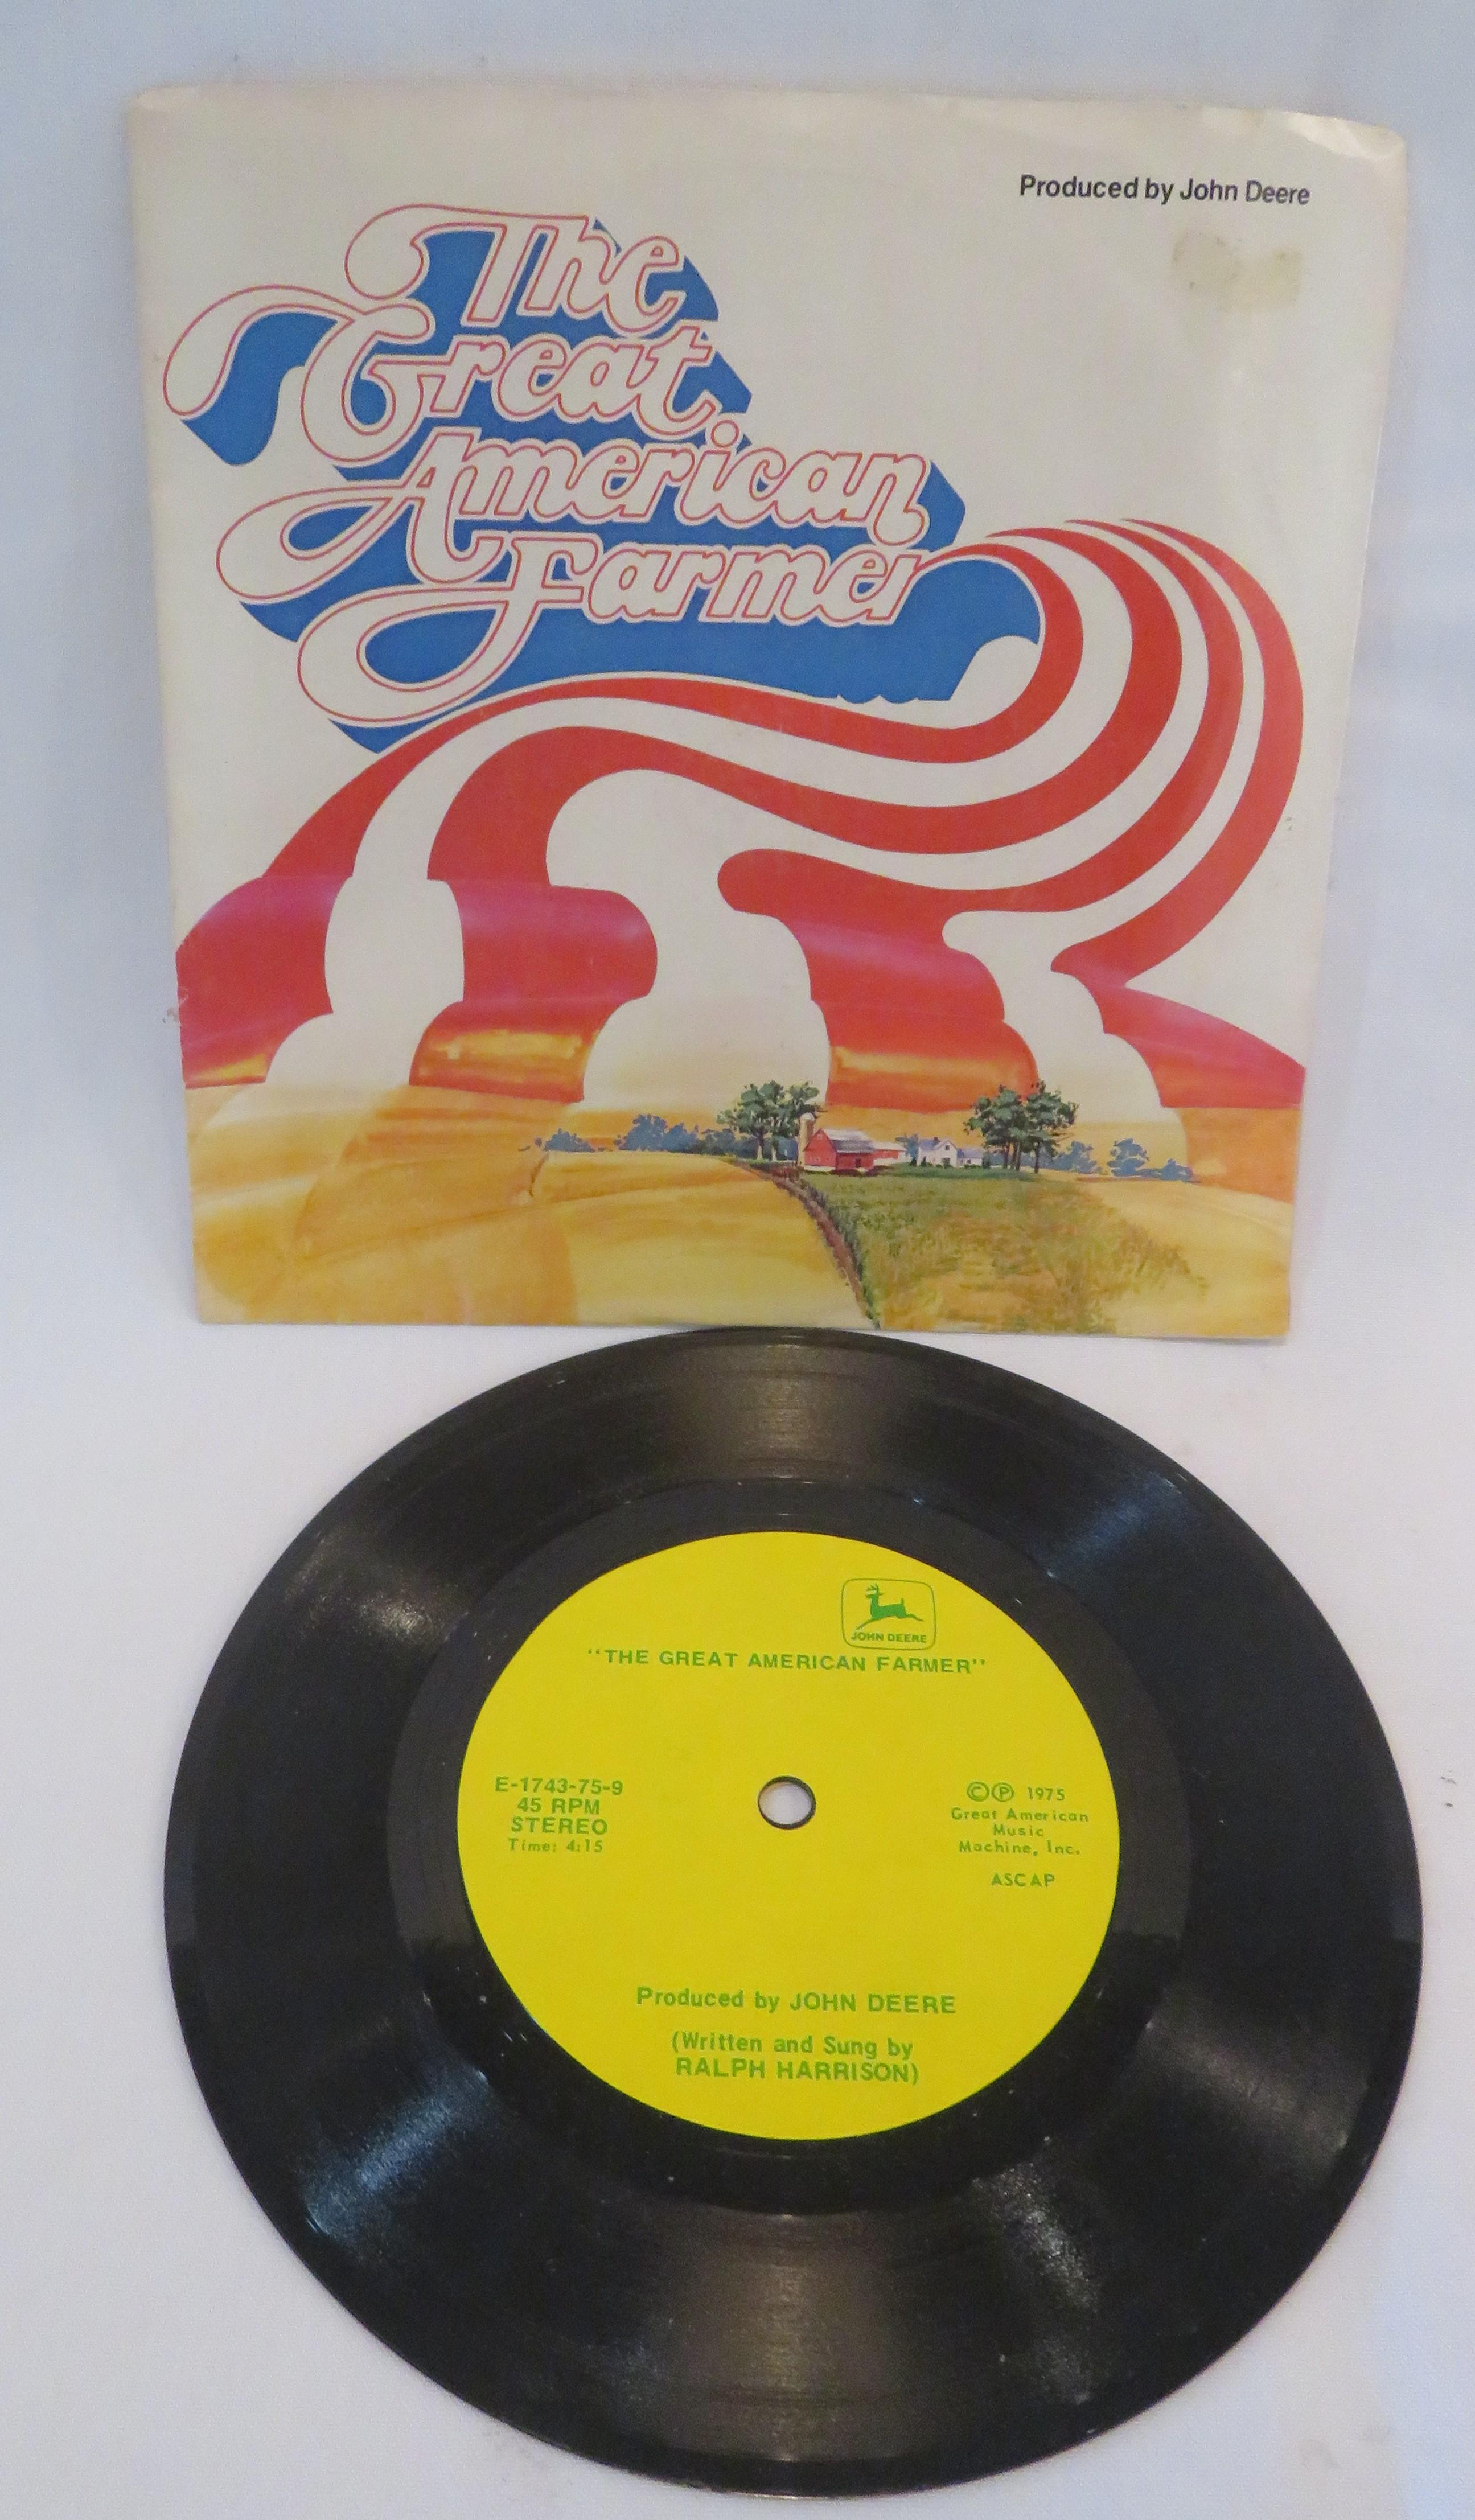 John Deere "The Great American Farmer" 45 RPM Record